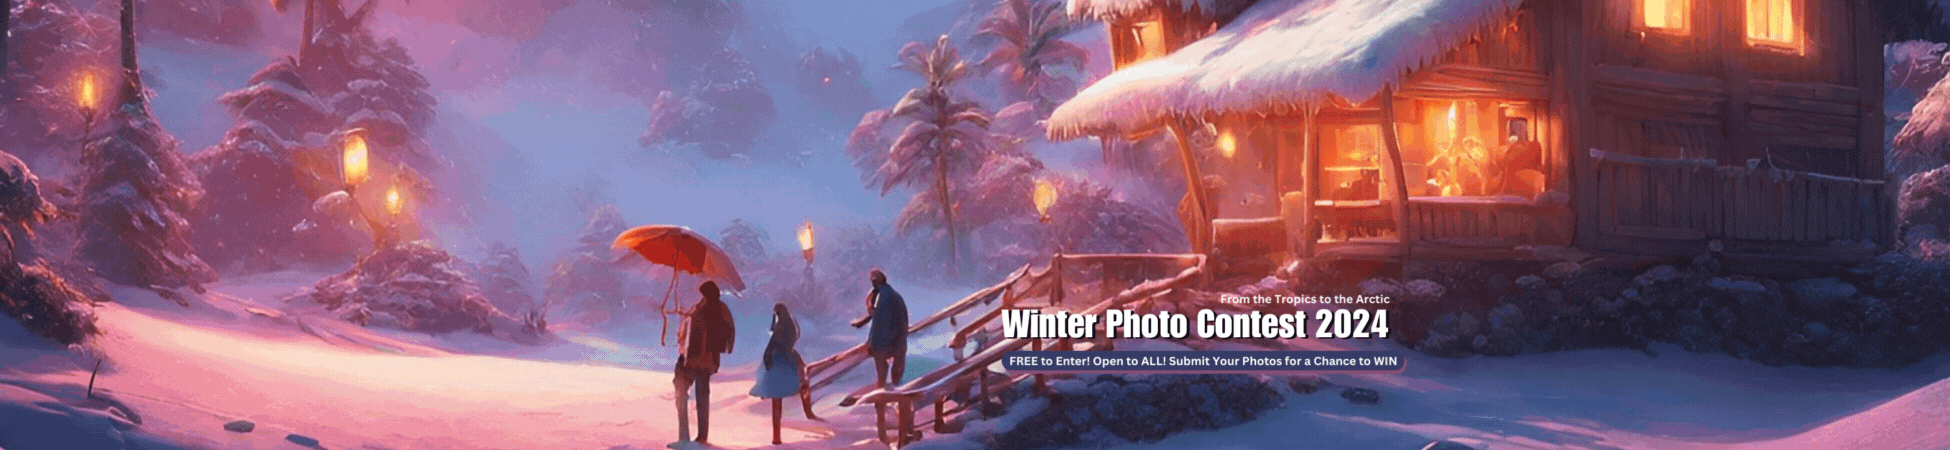 Winter Photo Contest 2024